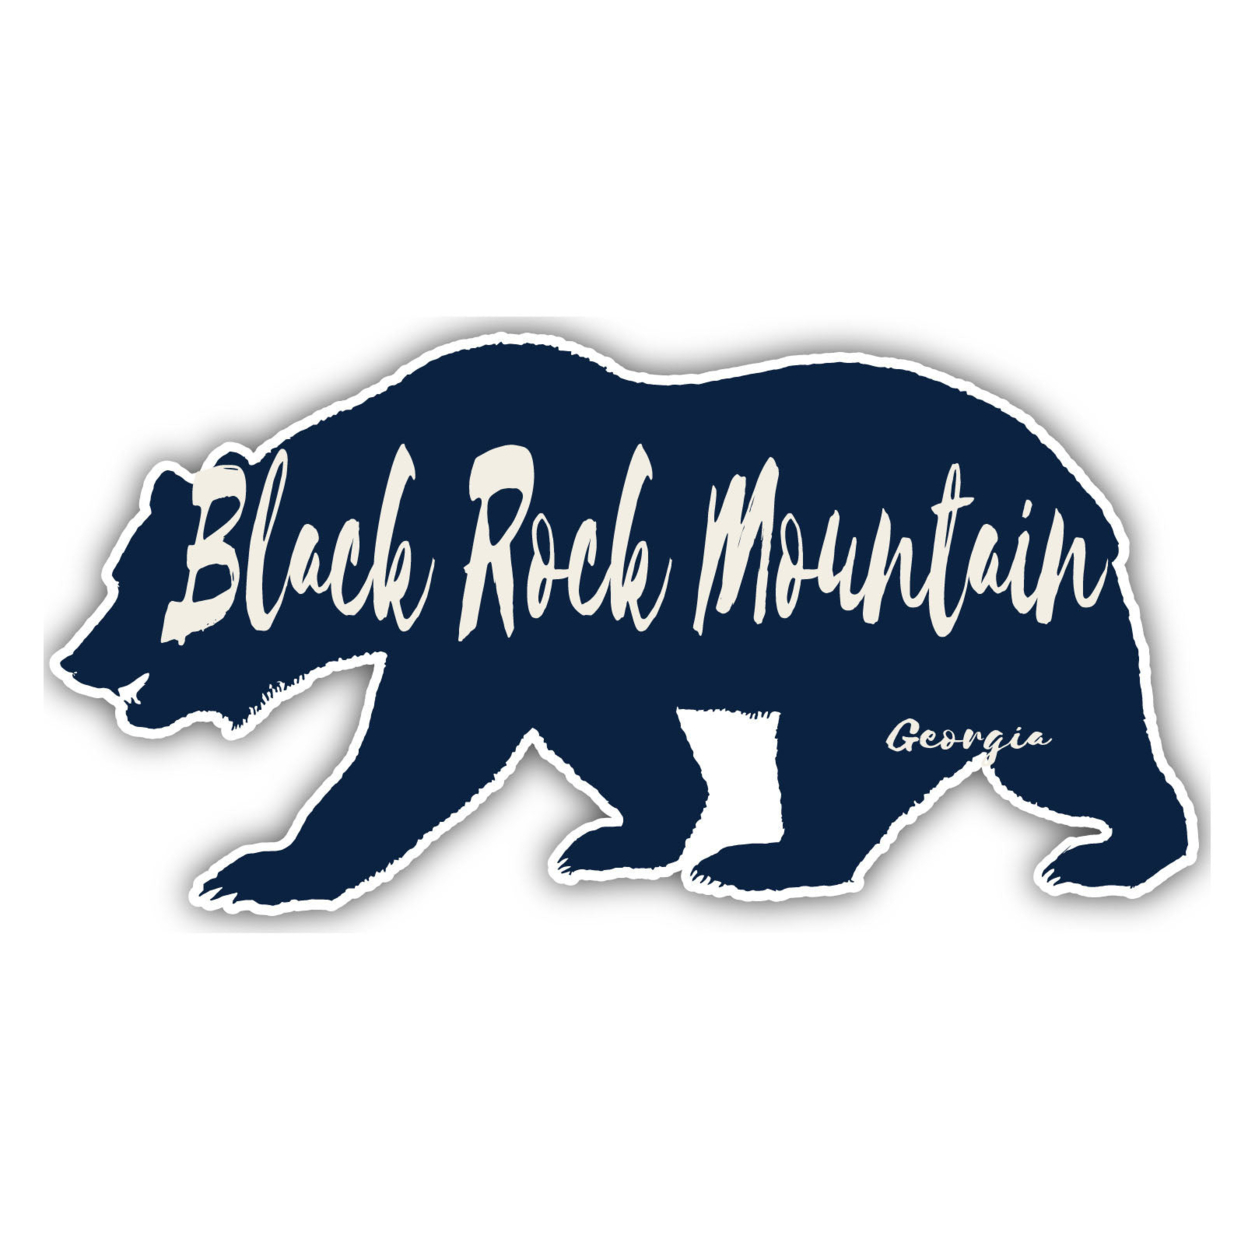 Black Rock Mountain Georgia Souvenir Decorative Stickers (Choose Theme And Size) - 4-Pack, 12-Inch, Bear